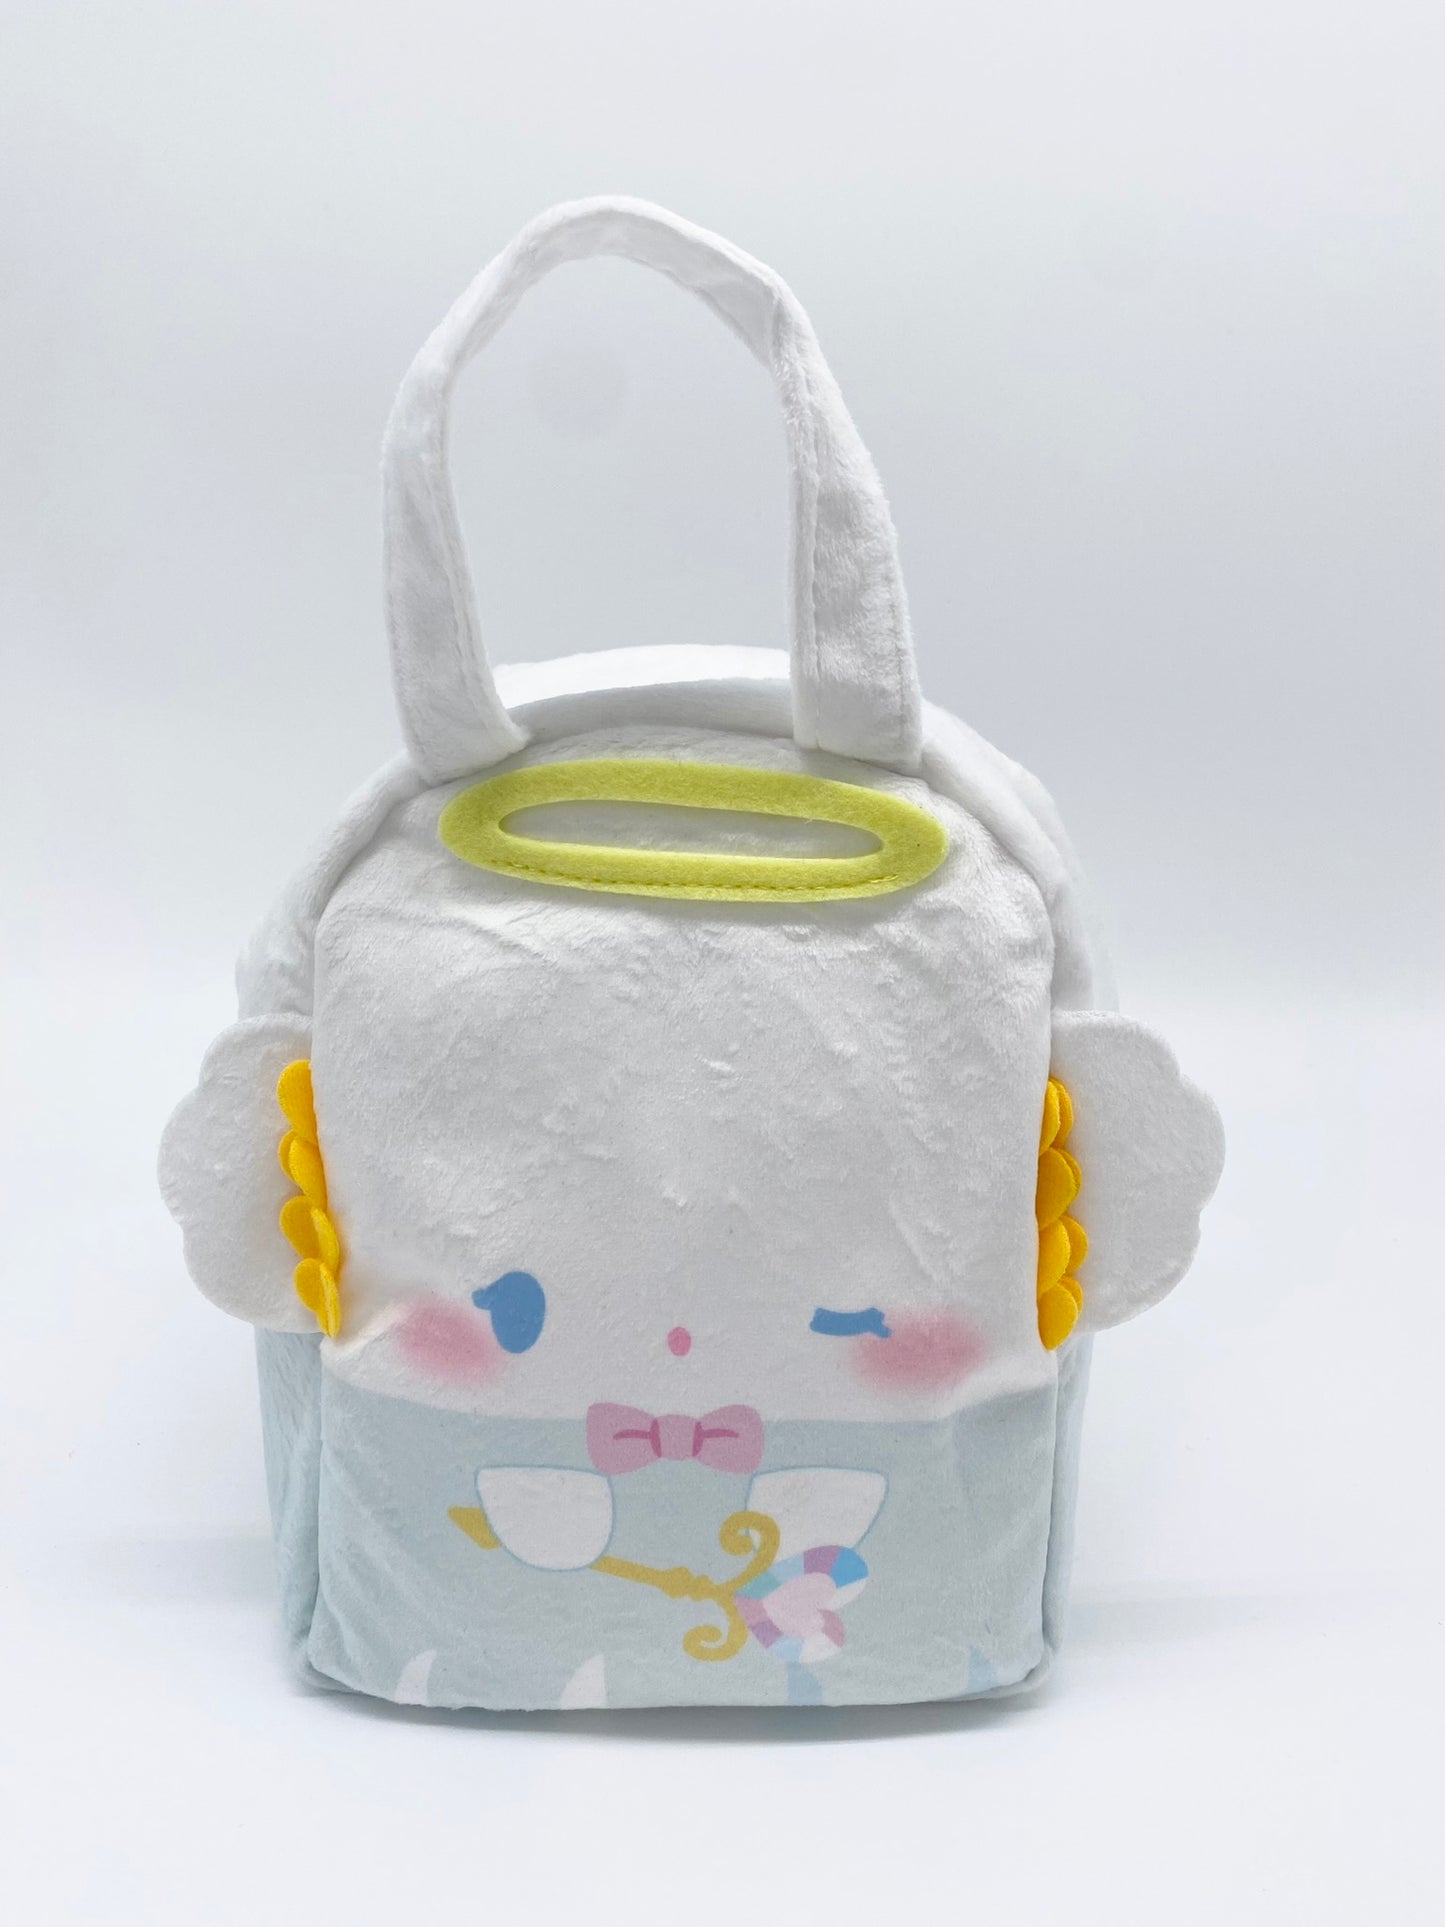 Sanrio Little Twin Stars Handbag from Japan